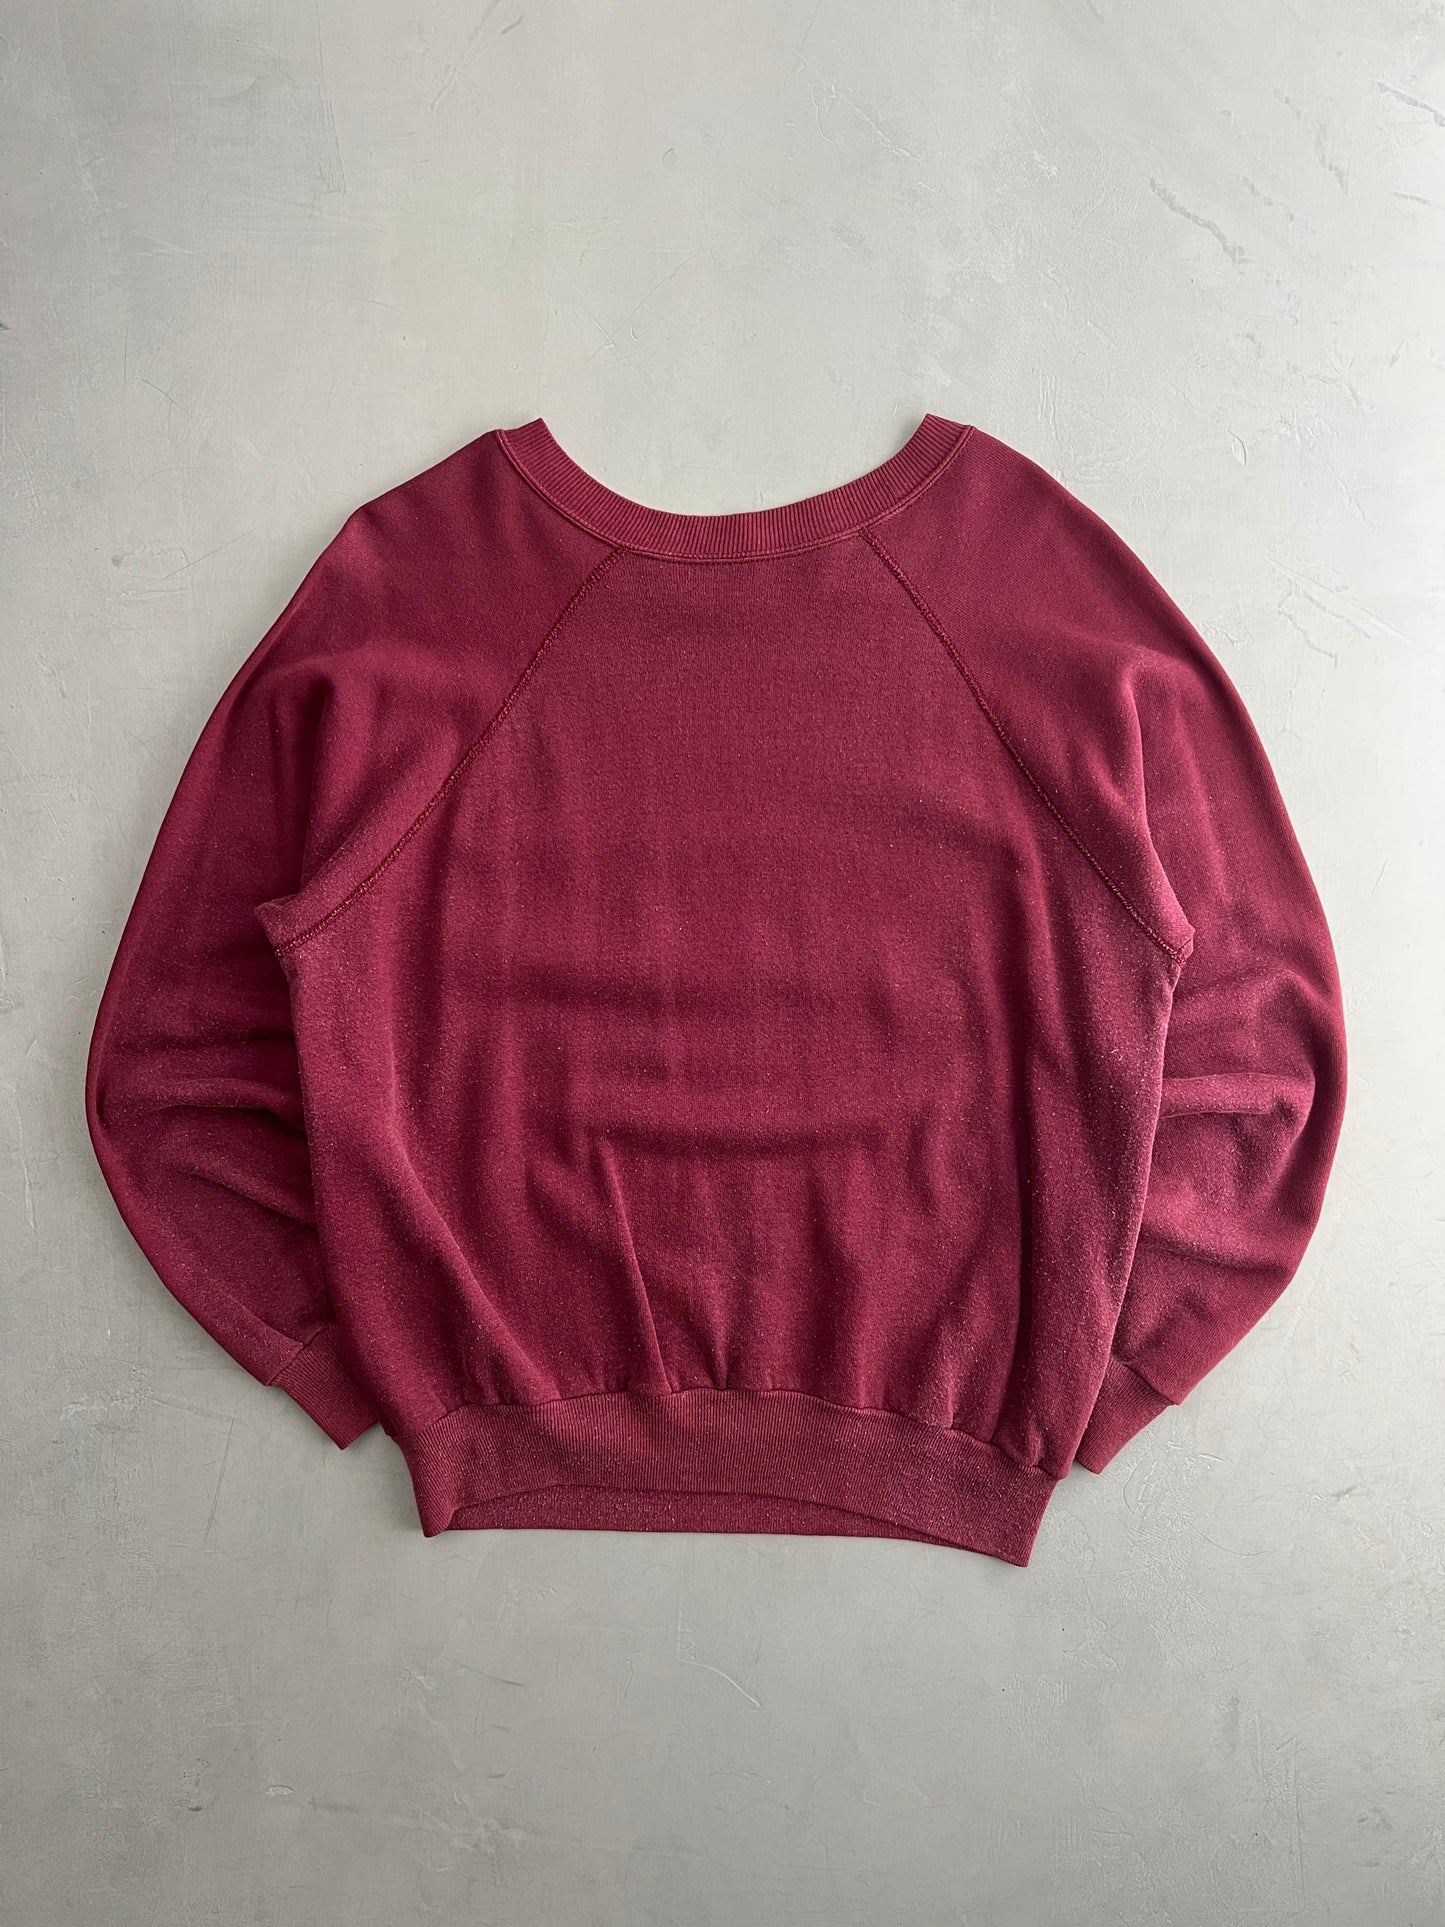 Faded Minnesota Gophers Sweatshirt [M]